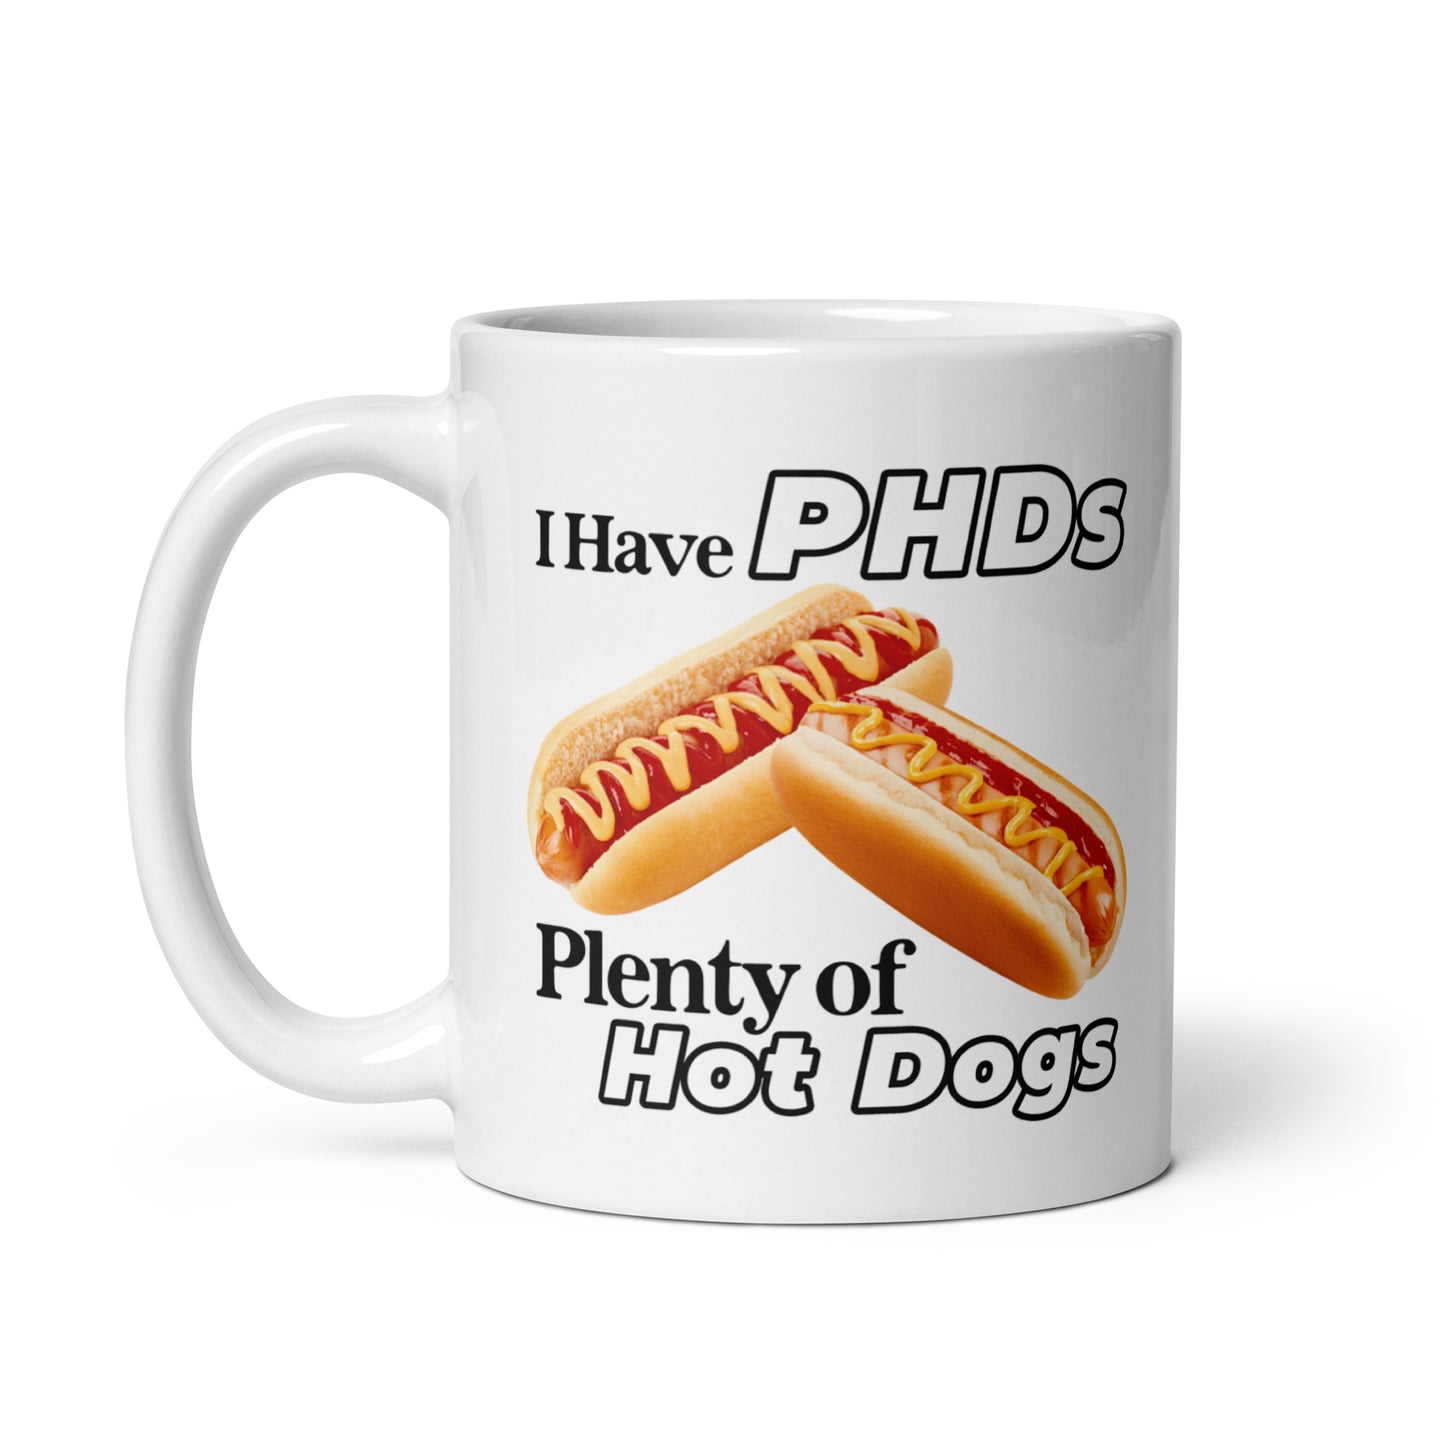 I Have PHDs (Plenty of Hot Dogs) mug